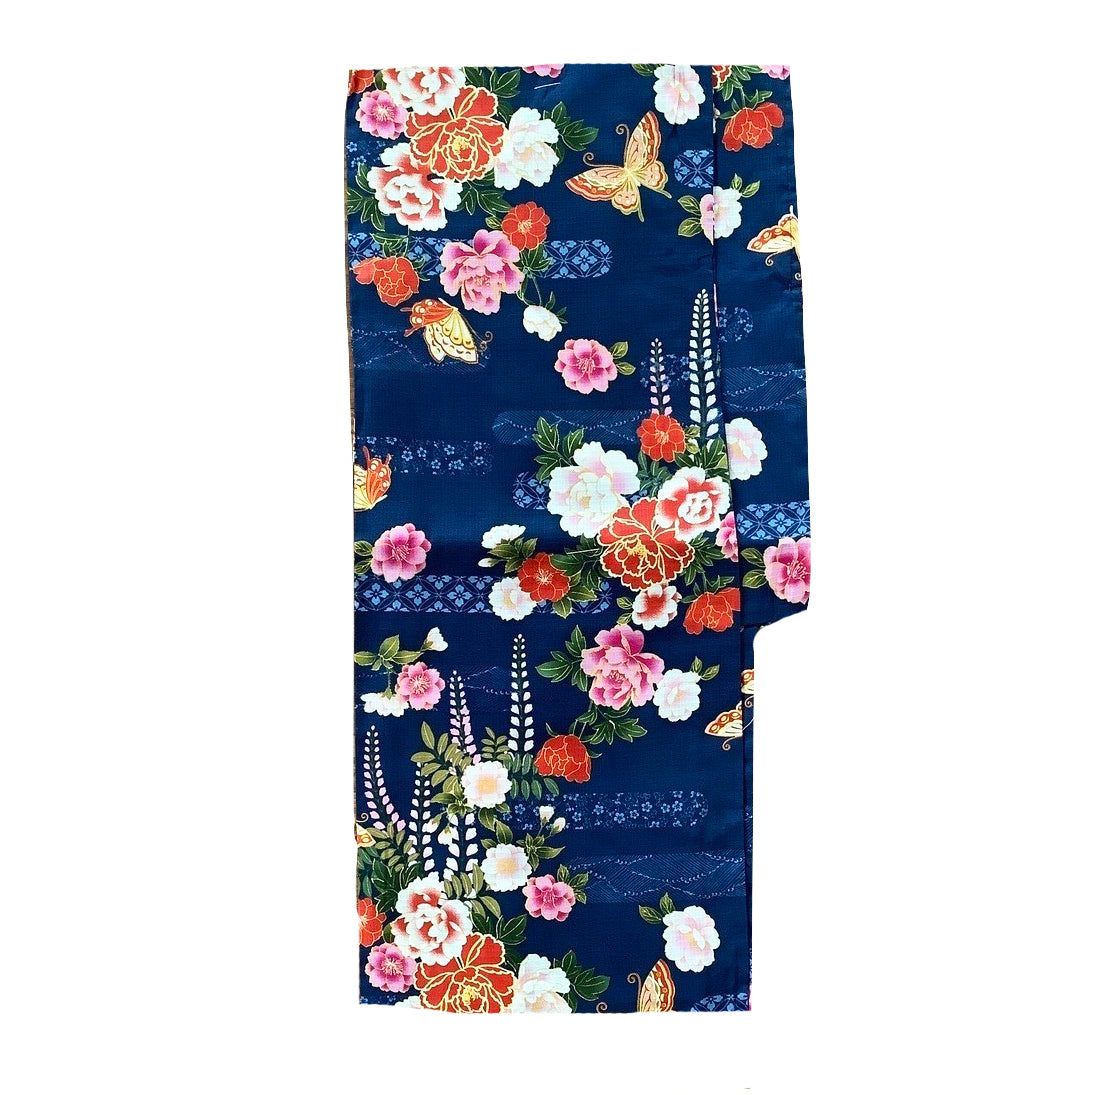 Yukata Kimono - Peony Flowers and Butterflies Blue